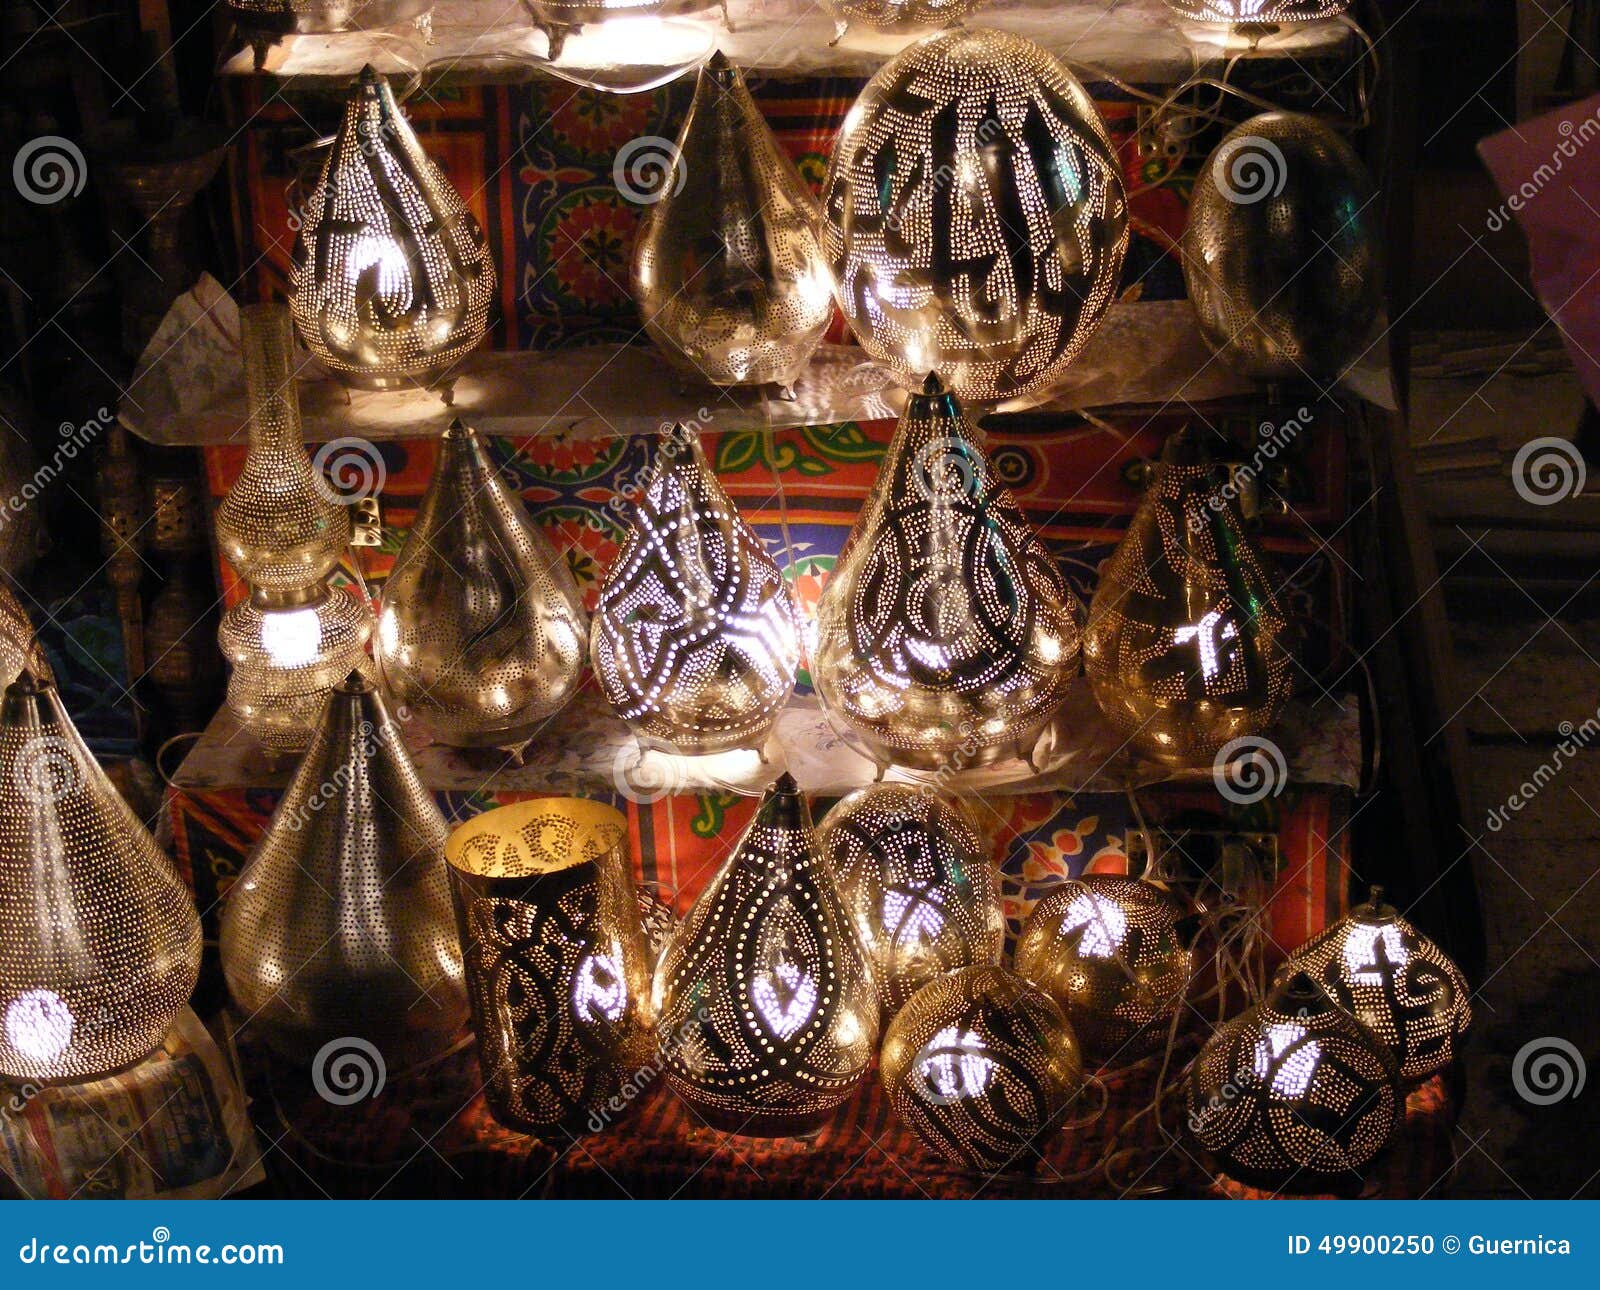 shop vendor selling copper lamps in khan el khalili souq market in egypt cairo